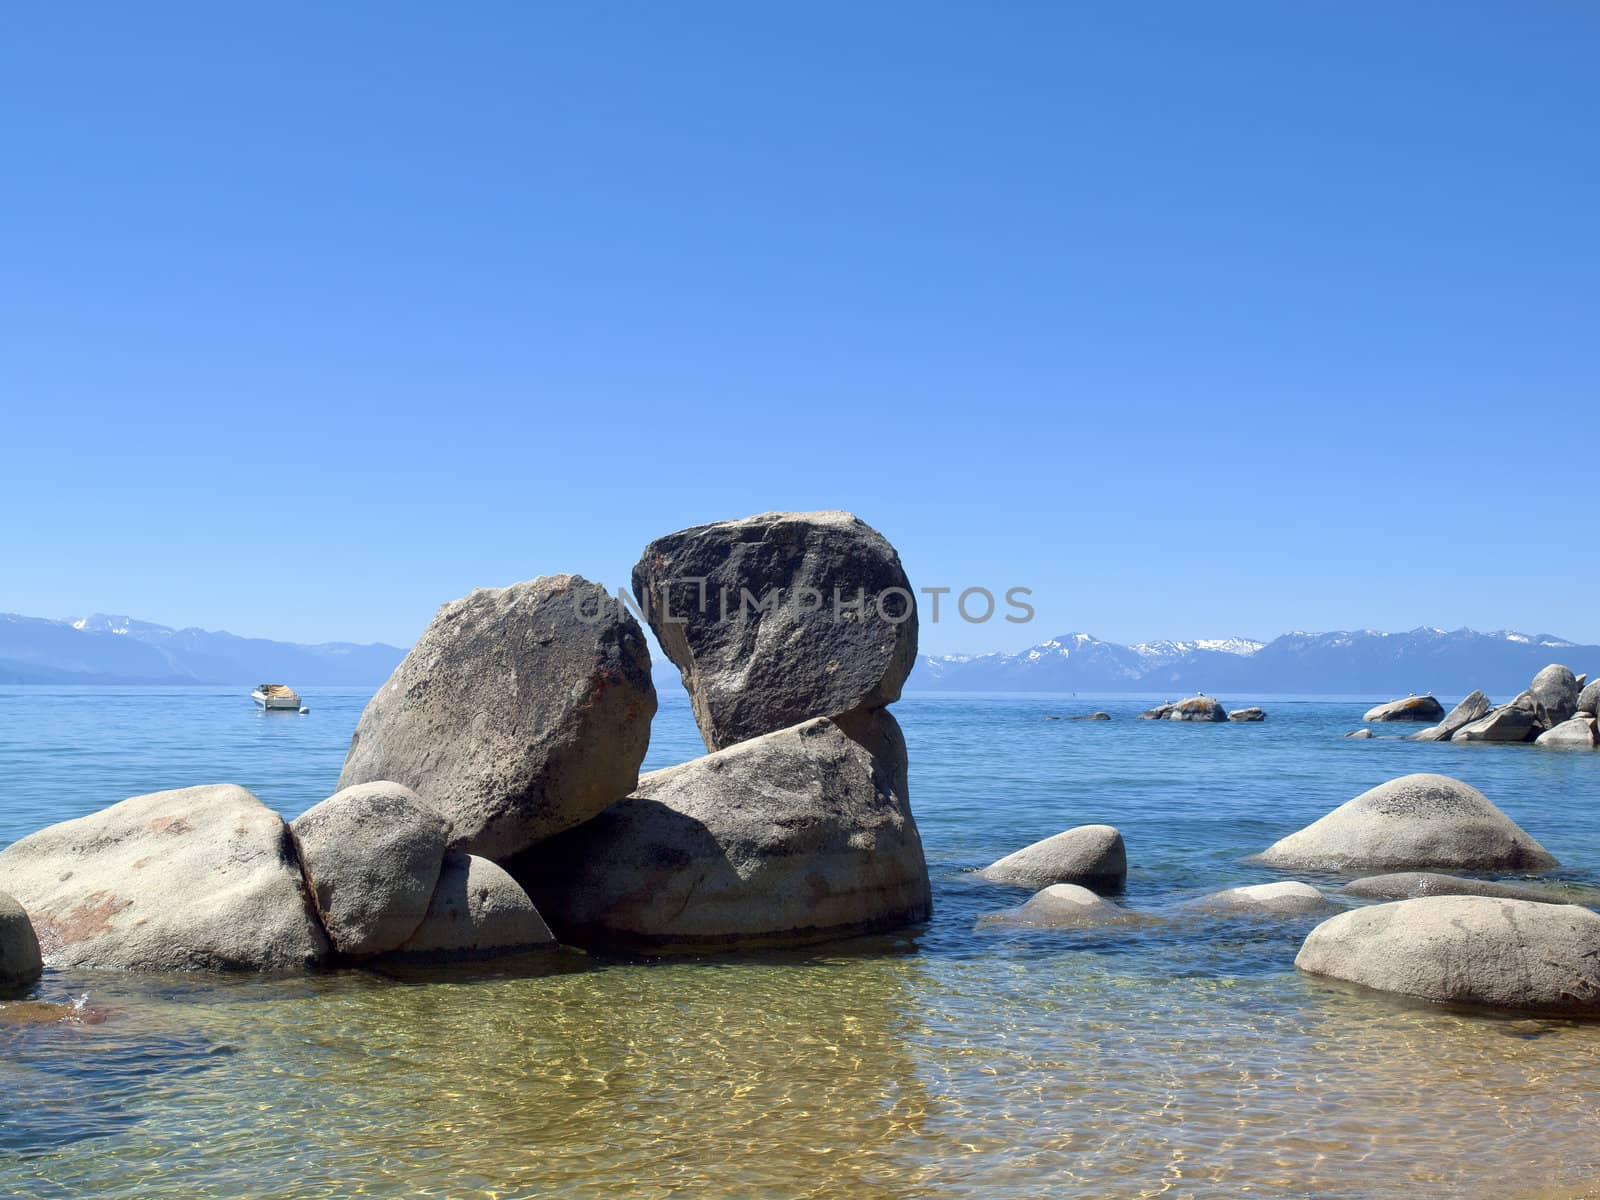 Visiting lake Tahoe in California and Nevada states.